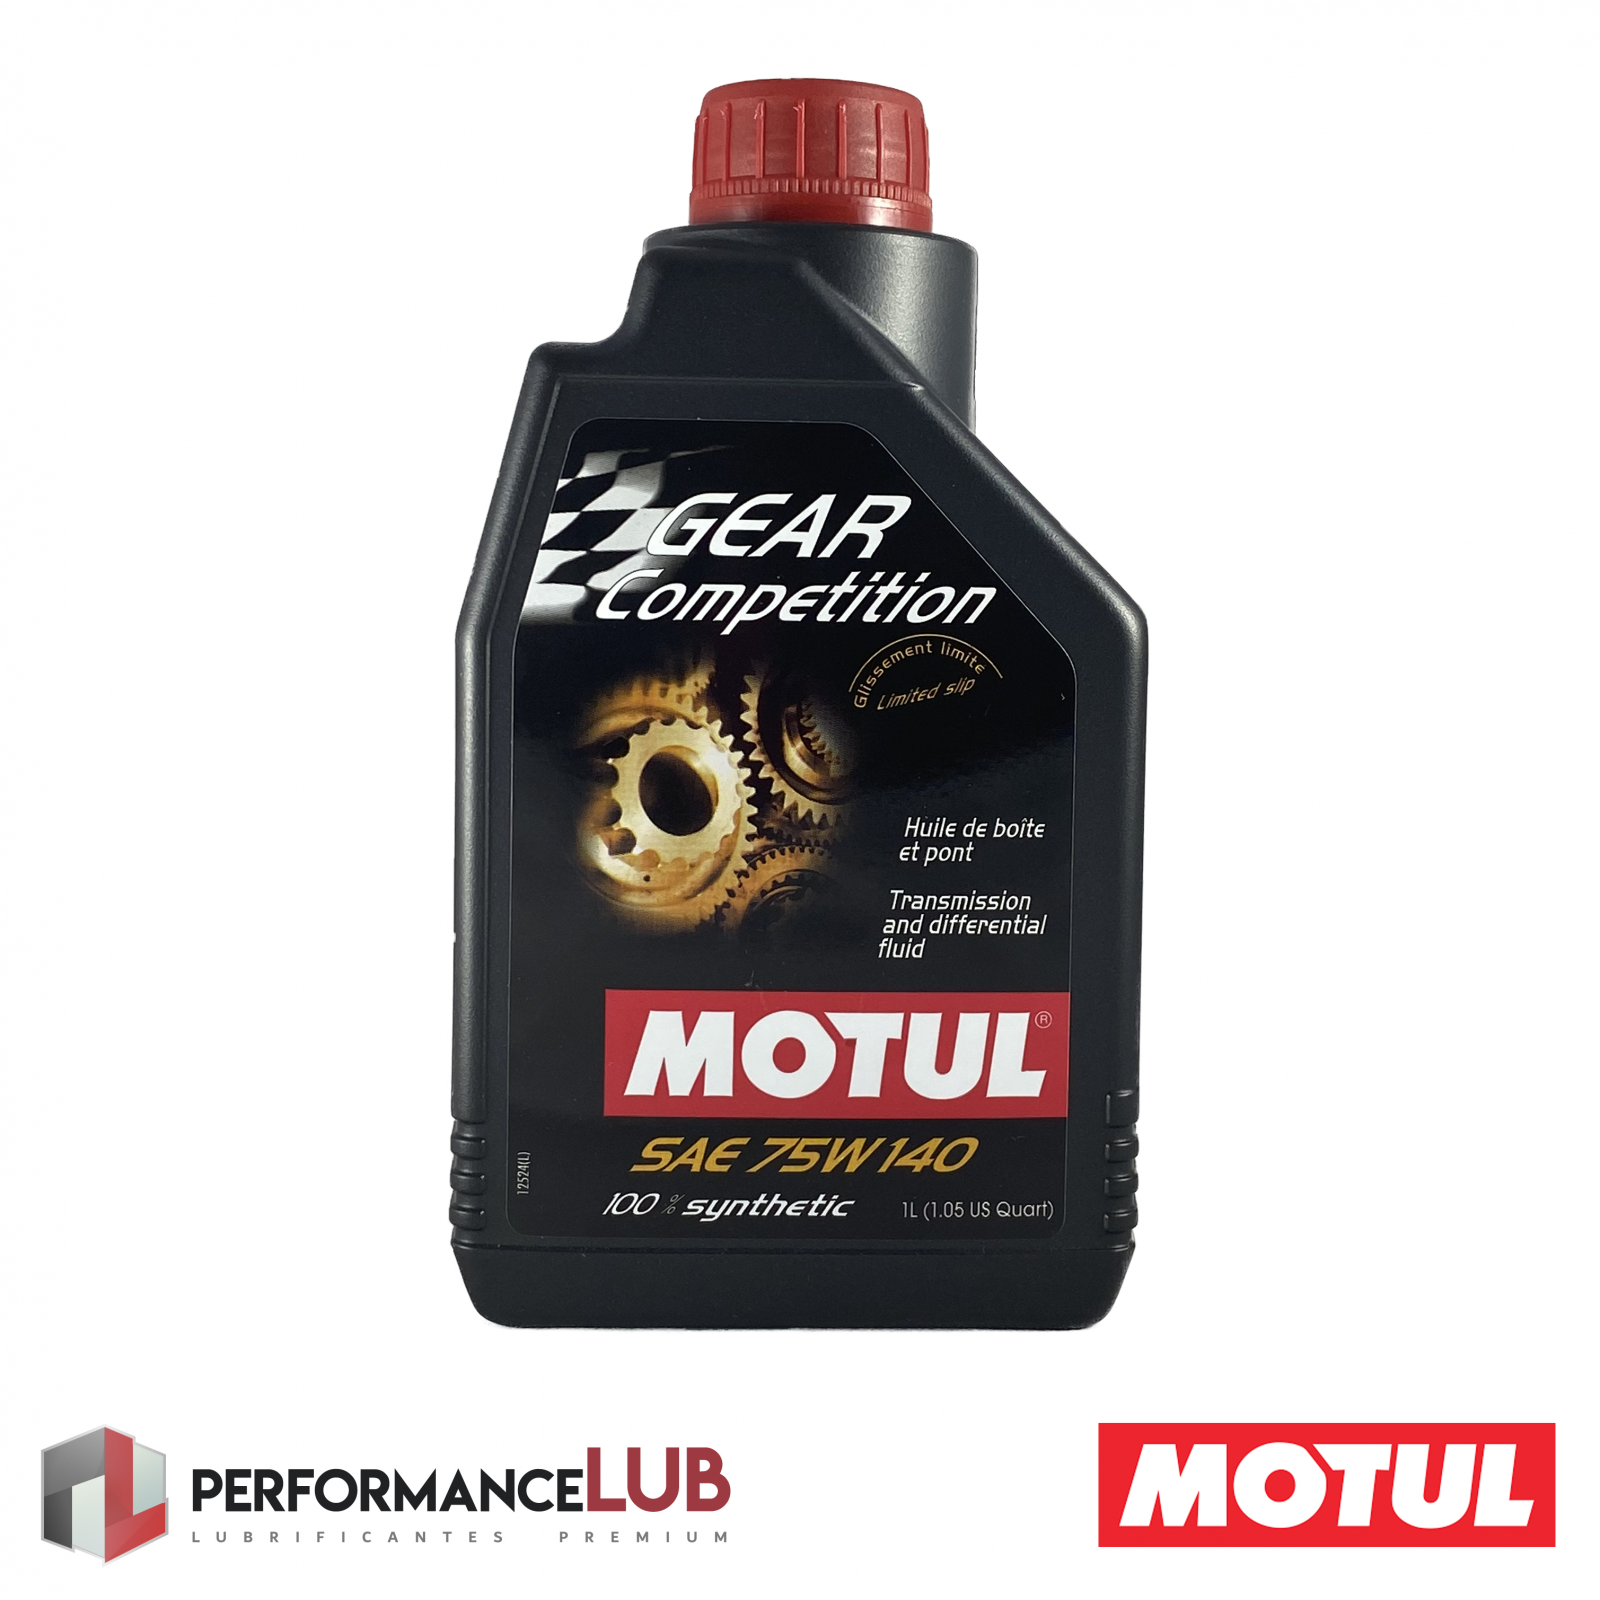 Motul Gear Competition 75W140 (API GL-5) - 1 litro - PerformanceLUB Lubrificantes Premium